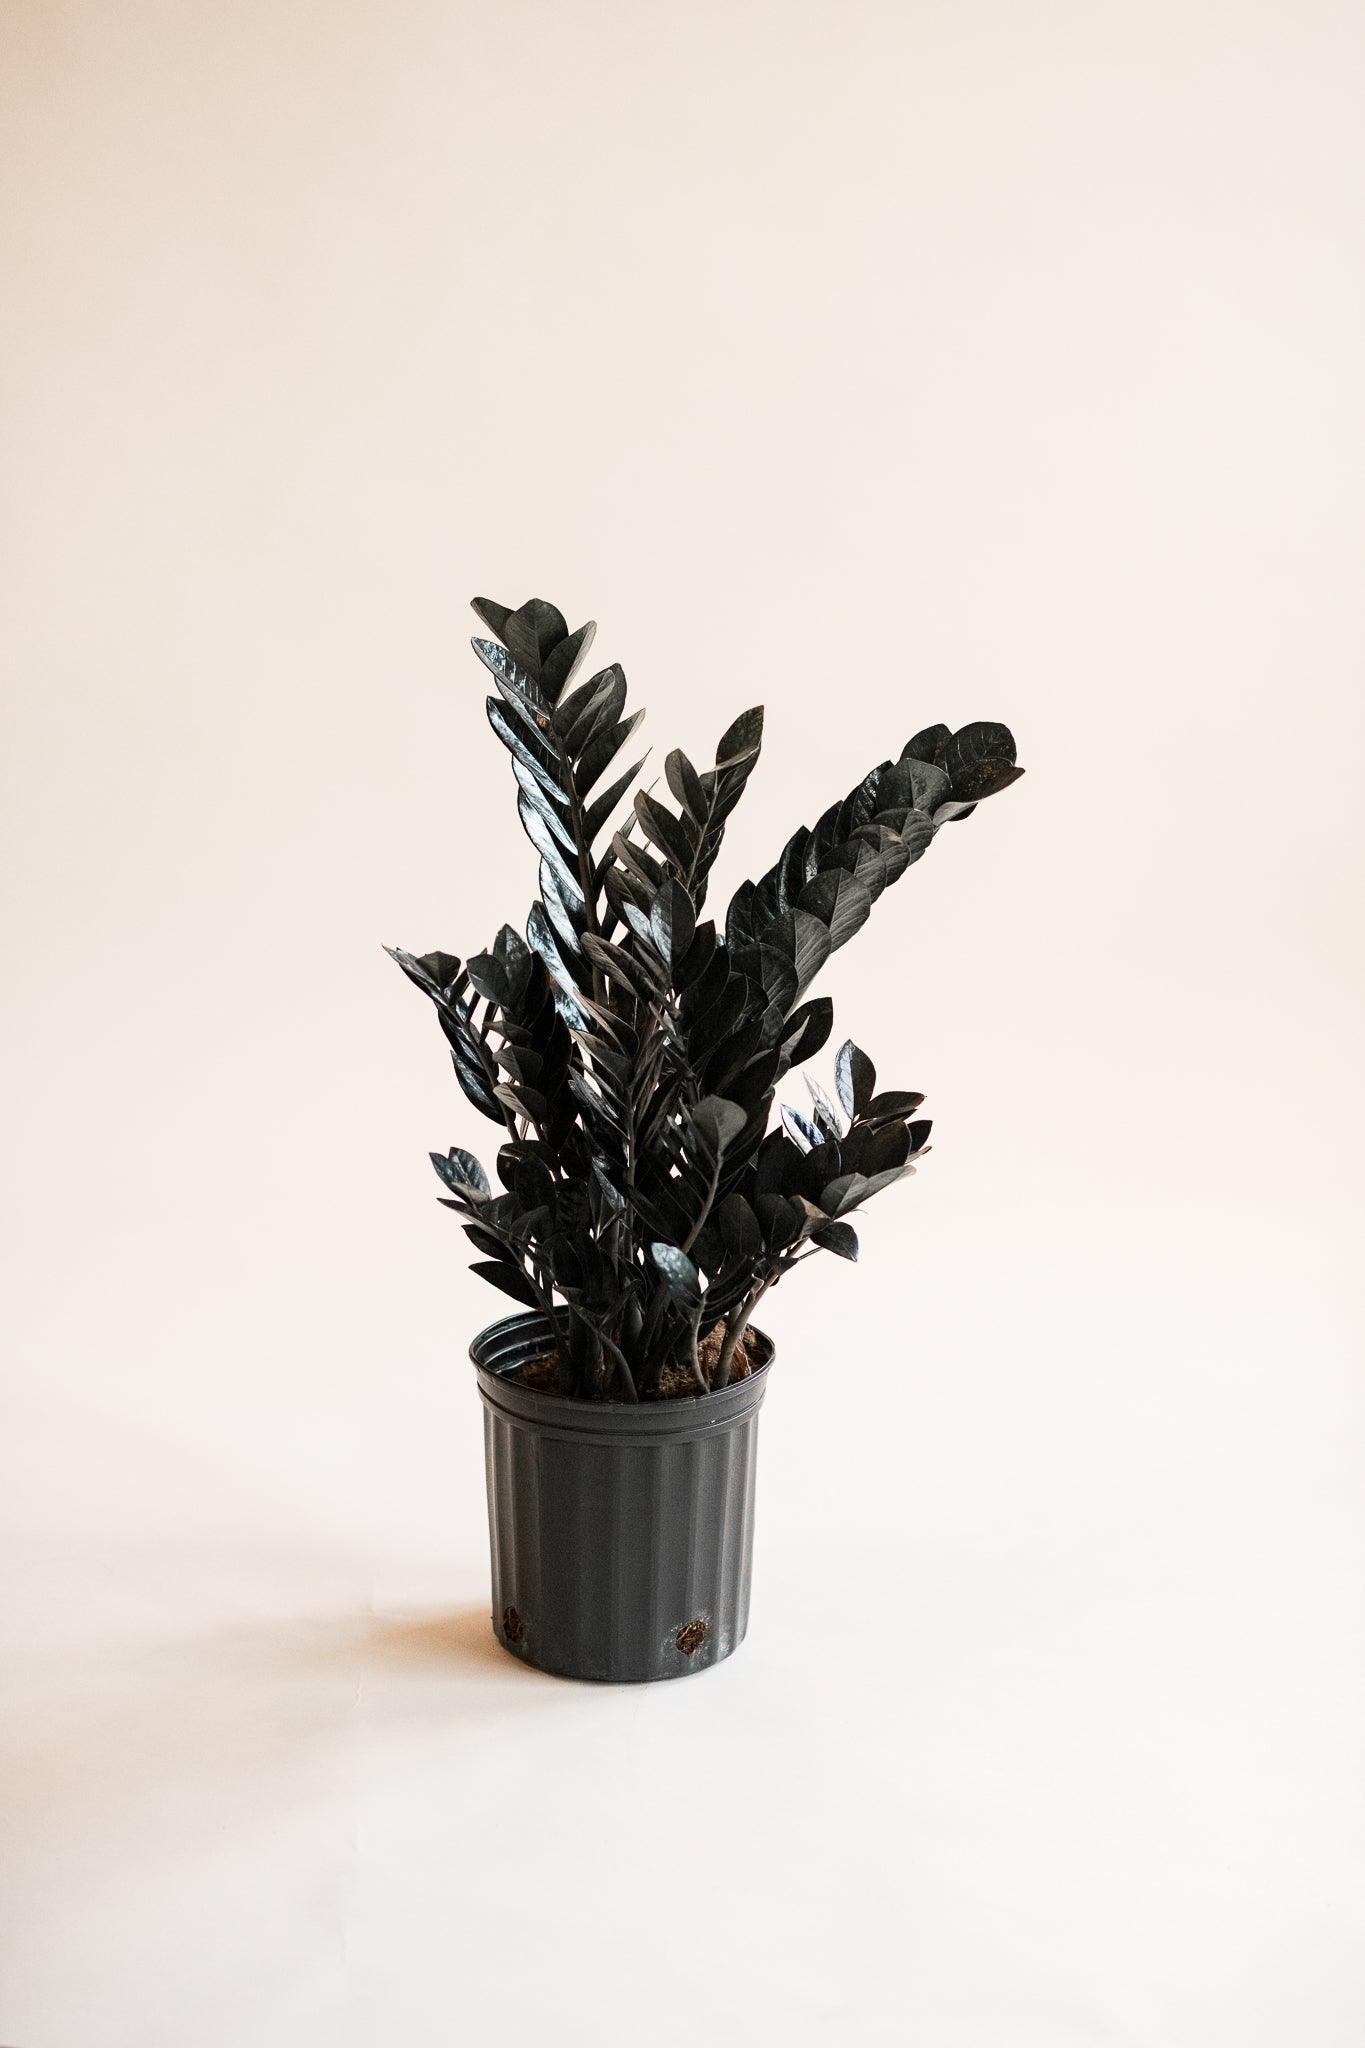 Zamioculcas raven 'Black Zz plant'